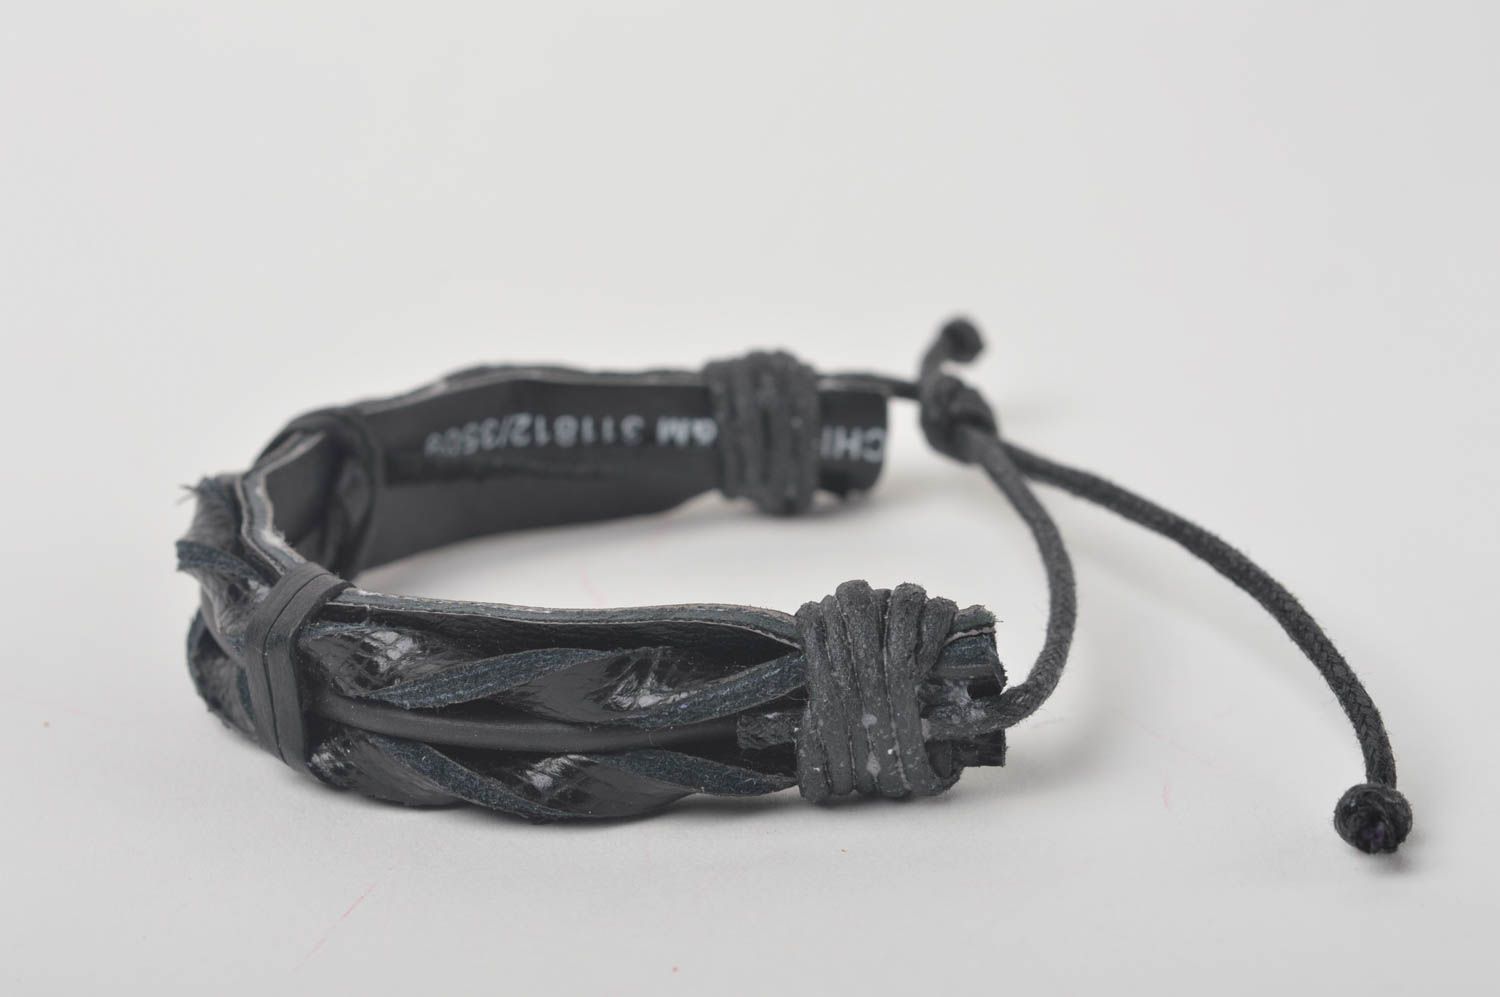 Unusual handmade leather bracelet designs designer accessories unisex bracelet photo 5